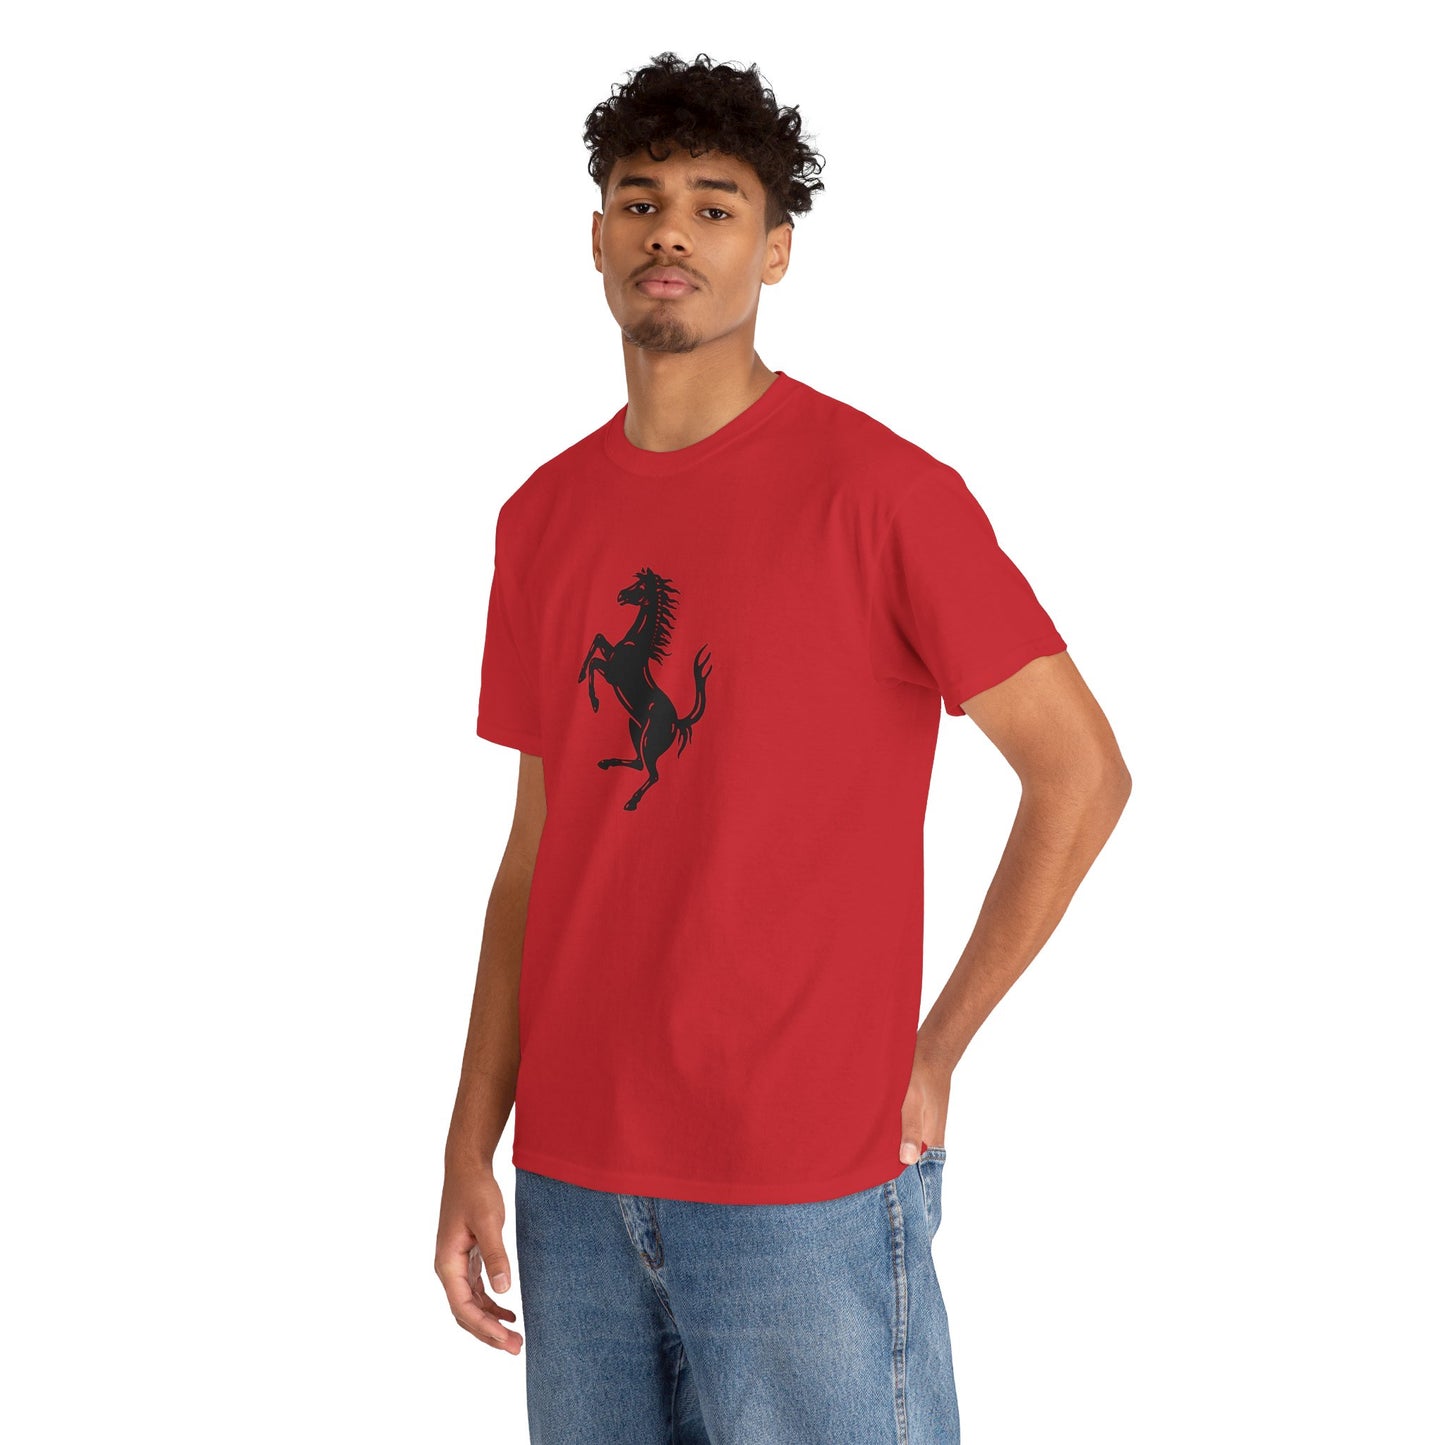 Ferrari Prancing Horse T-Shirt